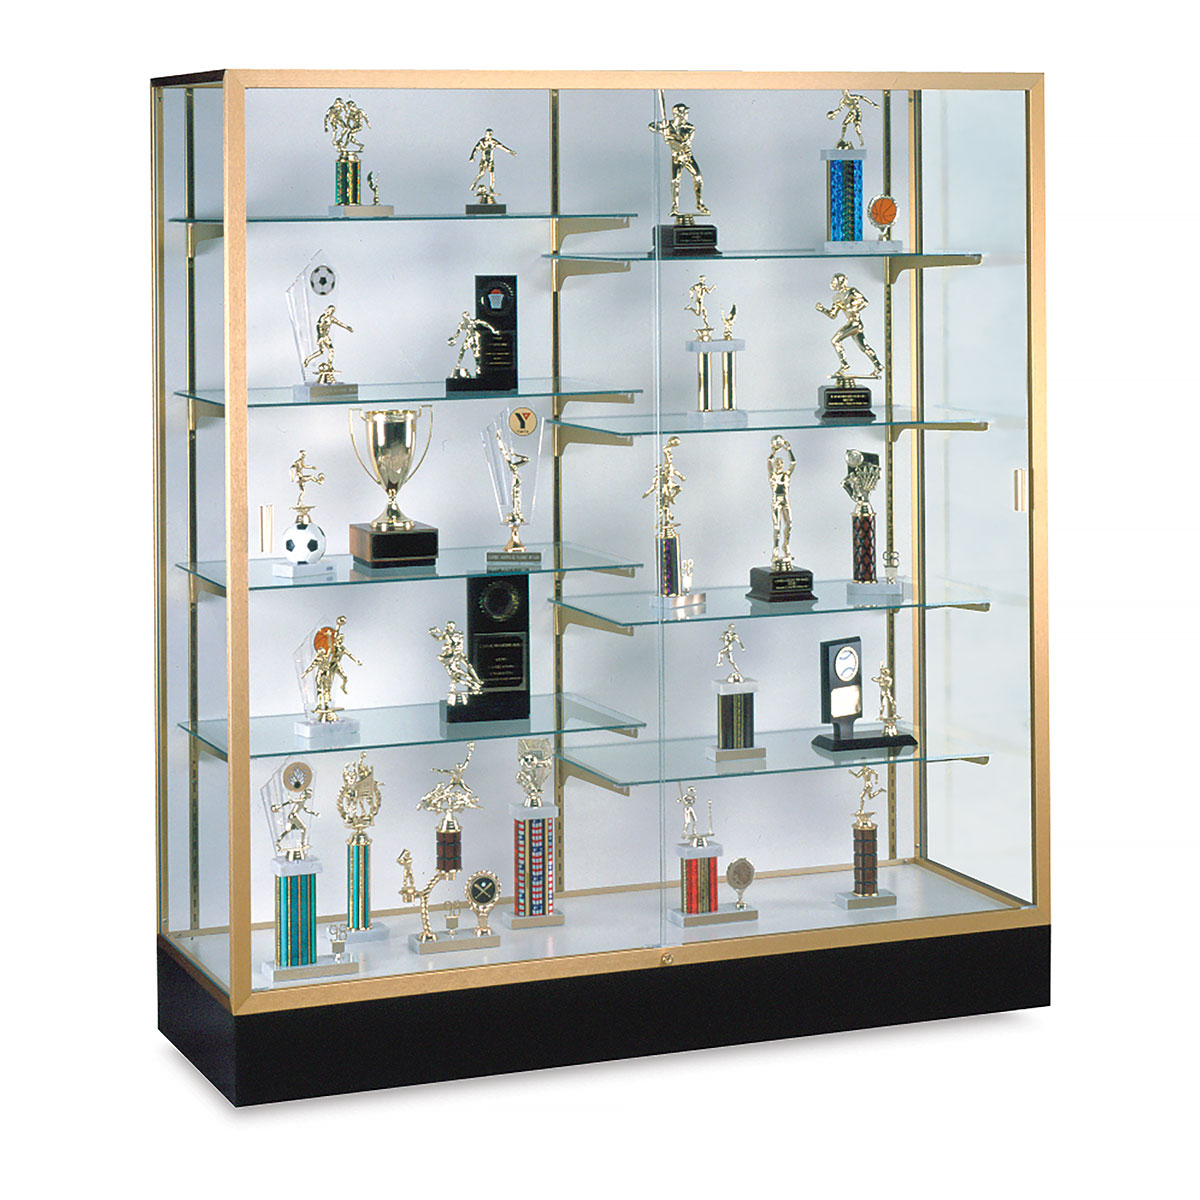 20 Trophy Cases Display ideas  trophy display, trophy case, display